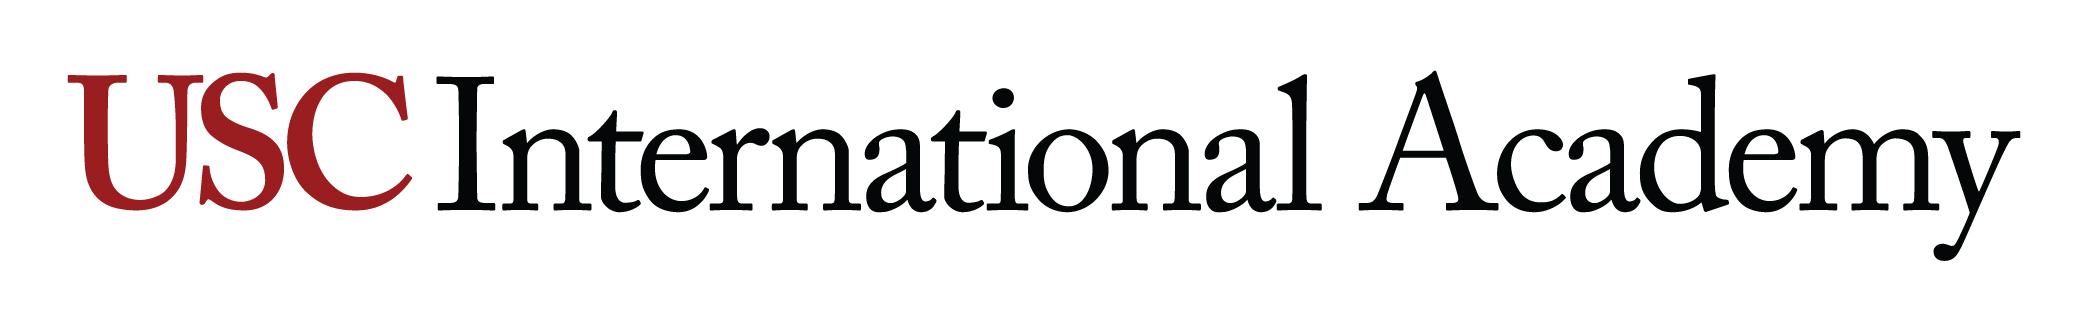 USC INTERNATIONAL ACADEMY APPLICATION PORTAL logo